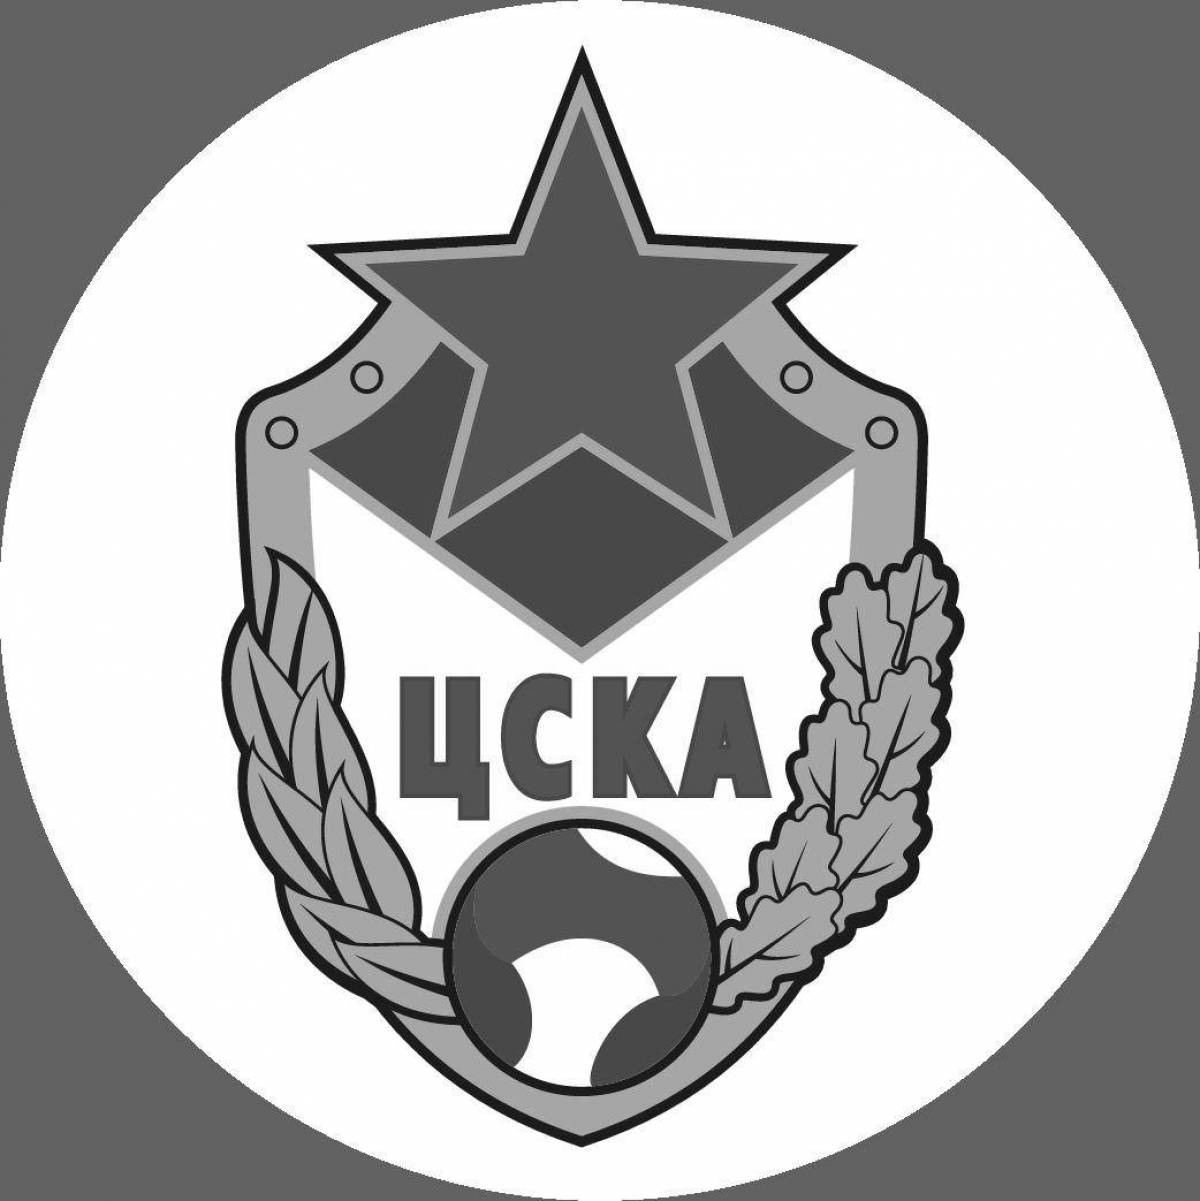 Unique coloring with CSKA logo